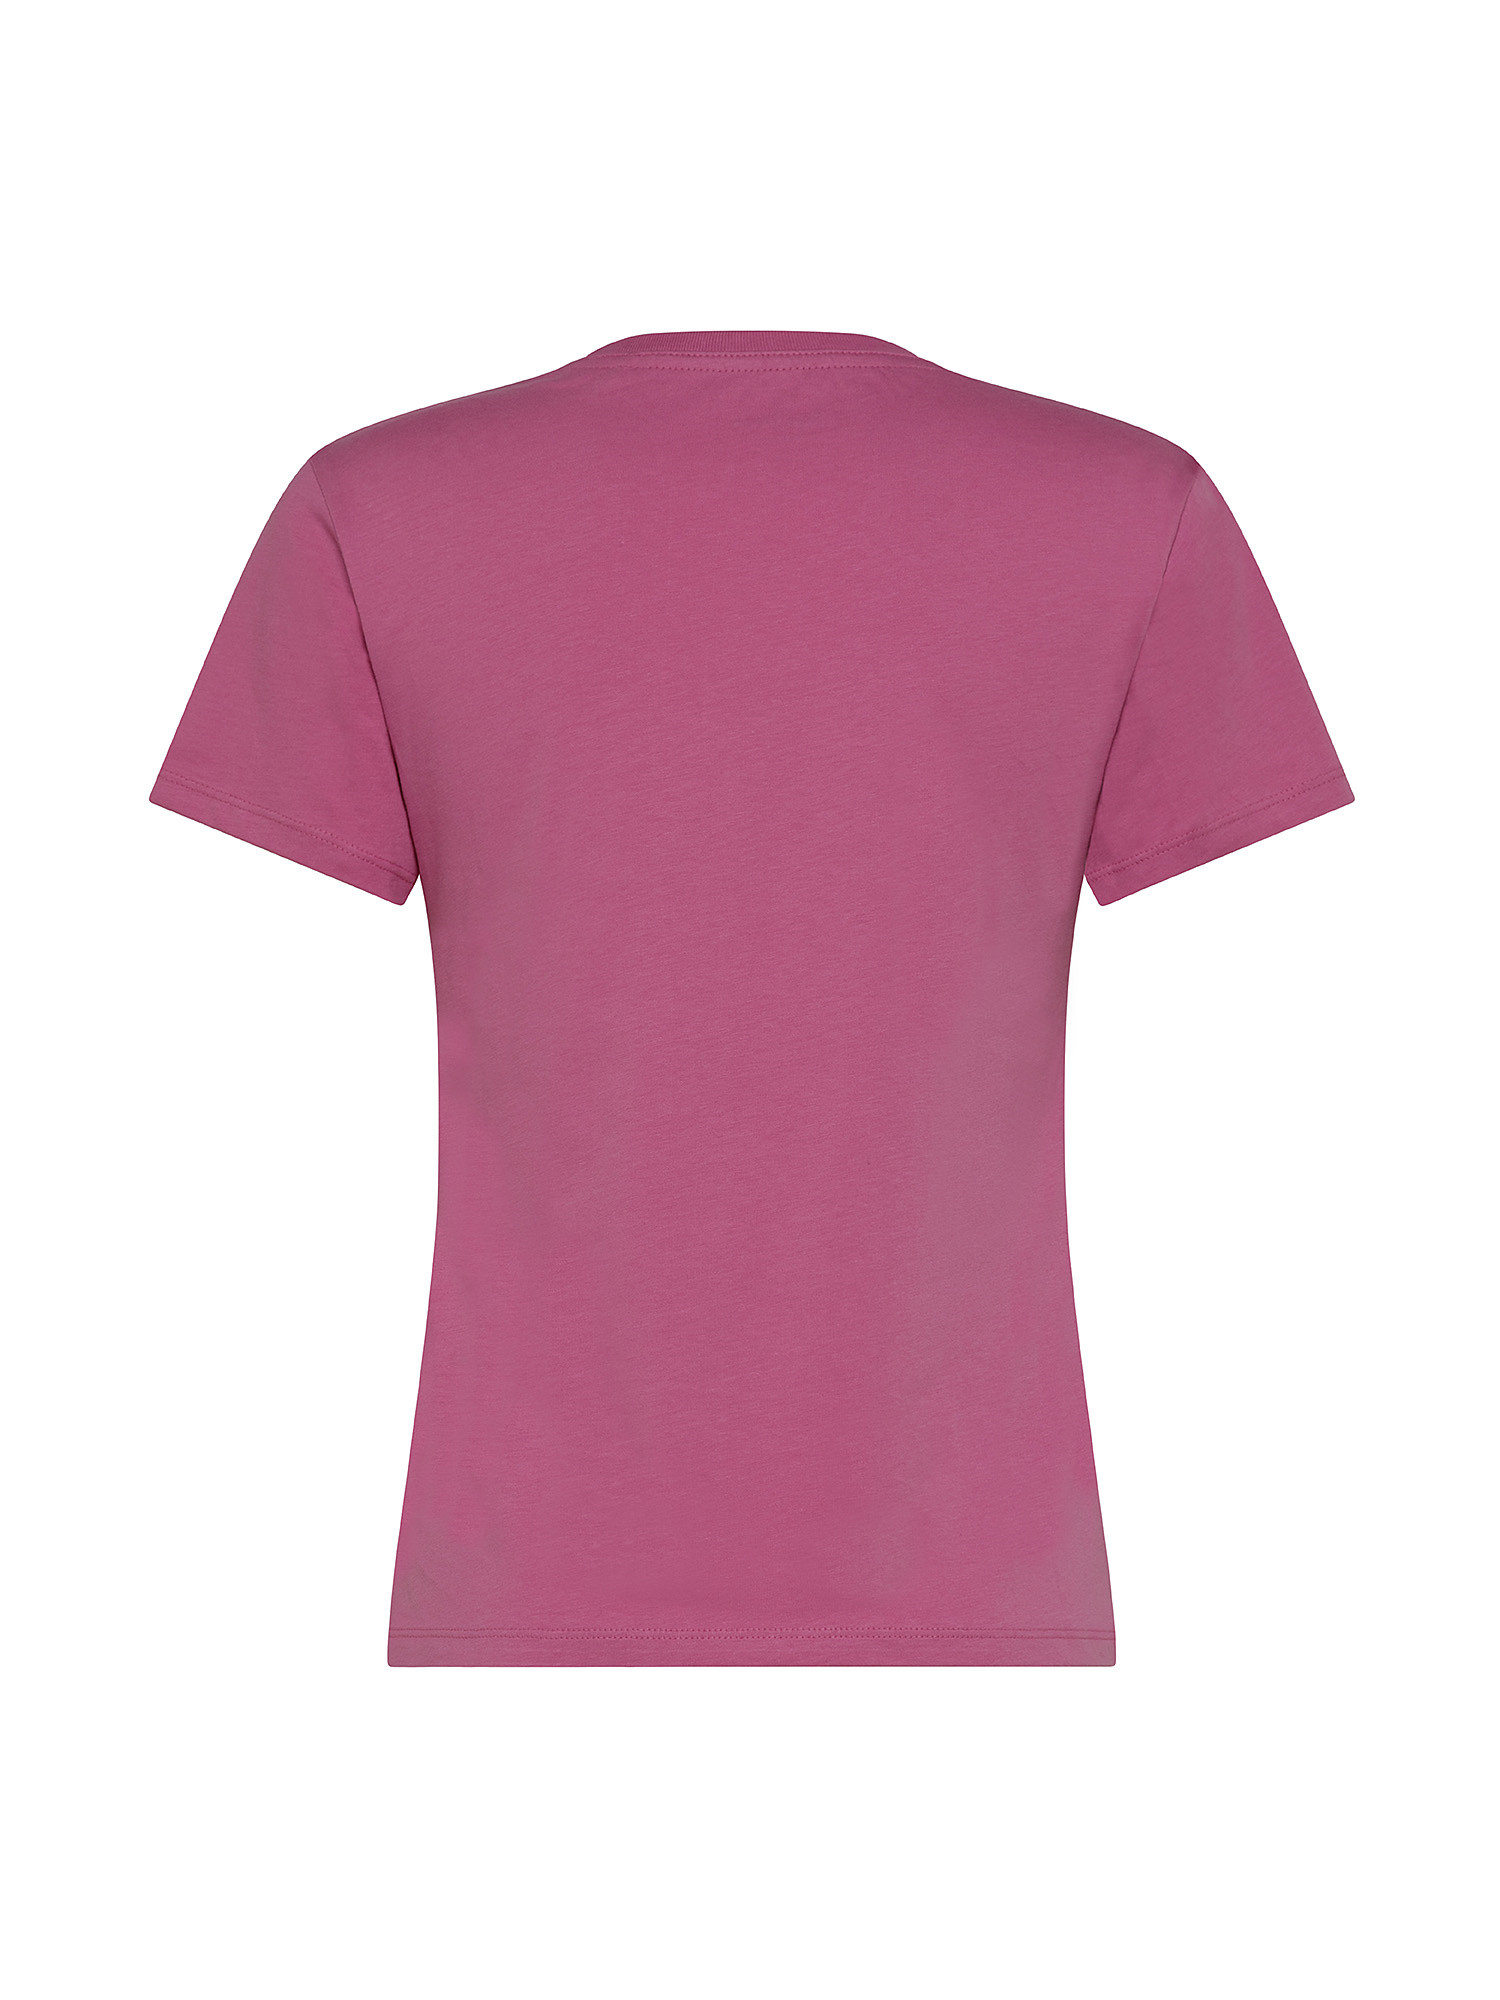 T-shirt with printed logo, Pink Flamingo, large image number 1